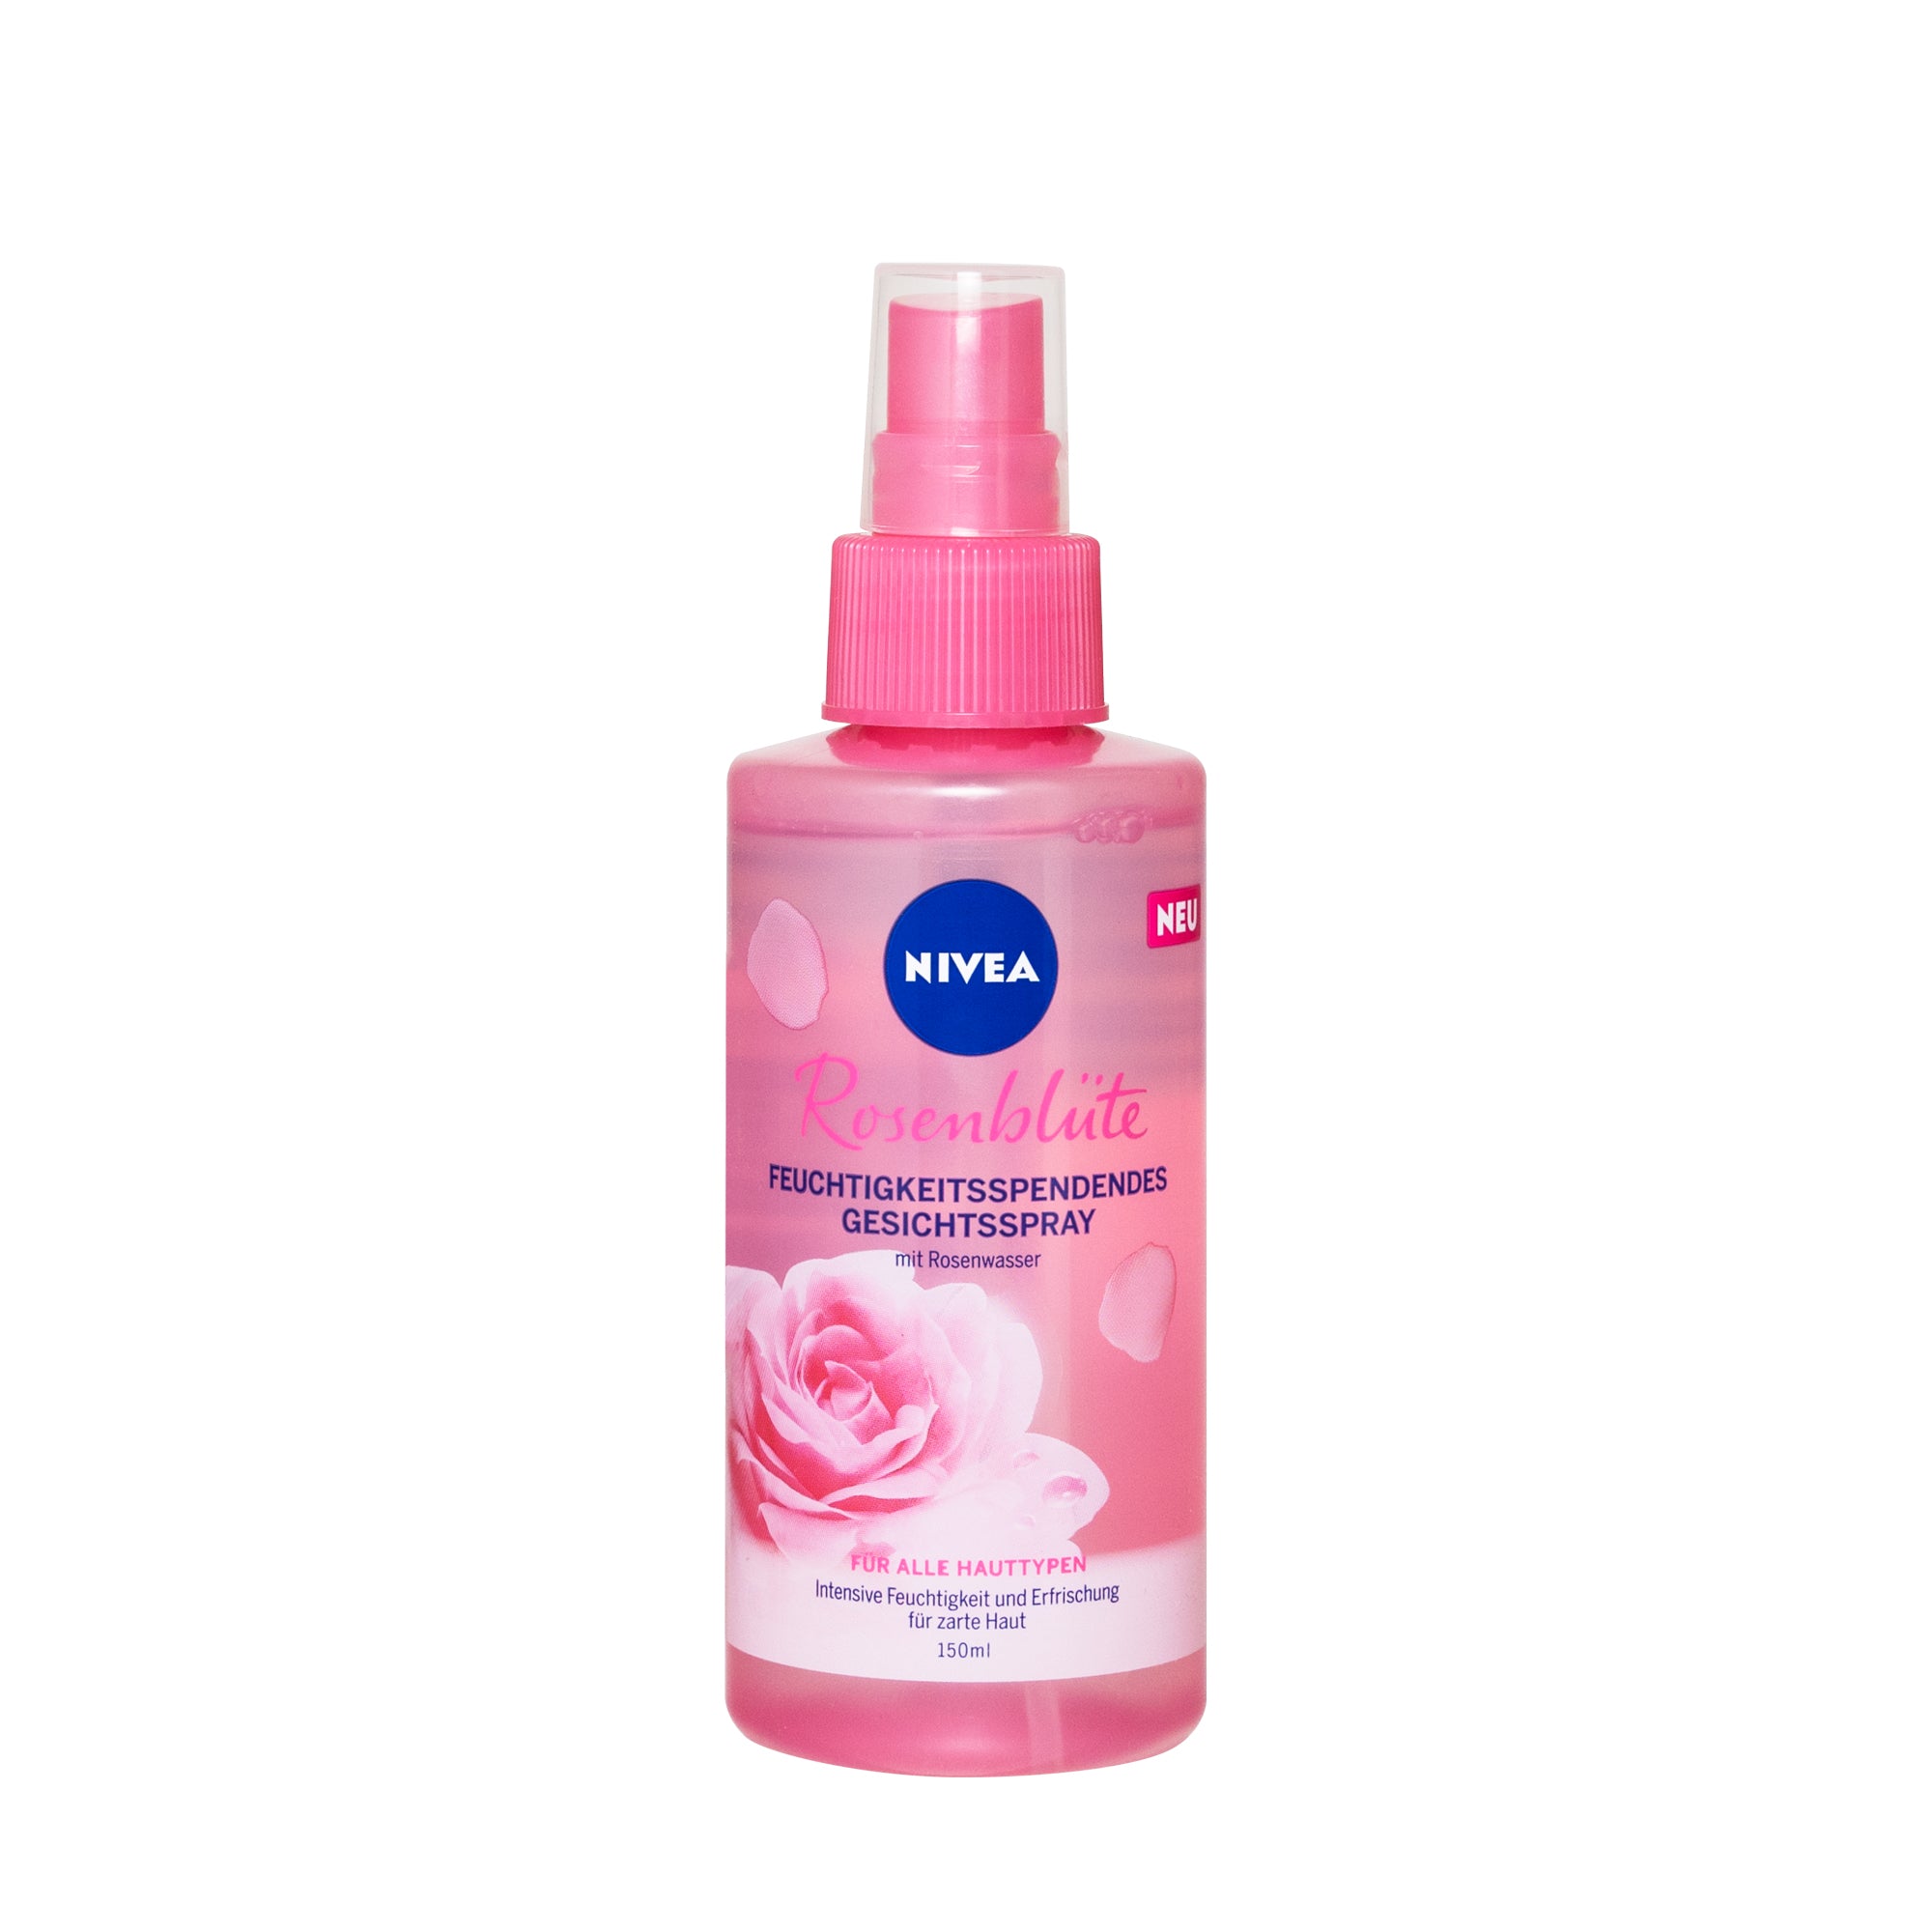 Hair Spray Bottle (pink - 200ml), Hair Spray Bottle, Automatic Spray Bottle  For Hair Styling, Facial